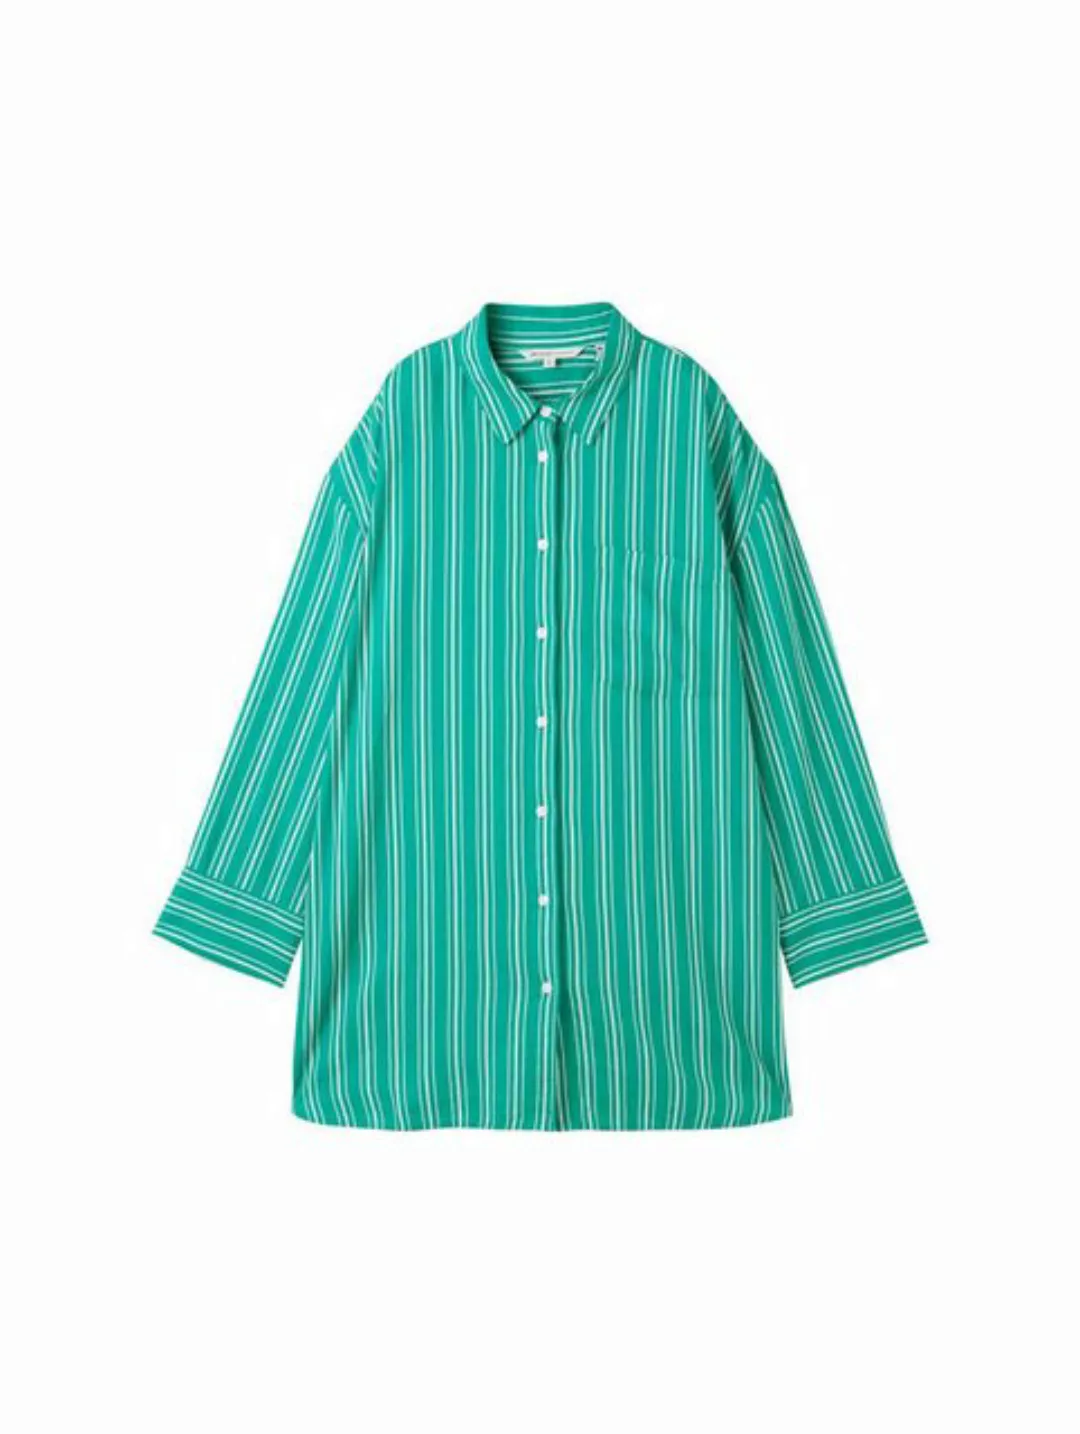 TOM TAILOR Denim Blusenshirt oversized linen shirt, green white vertical st günstig online kaufen